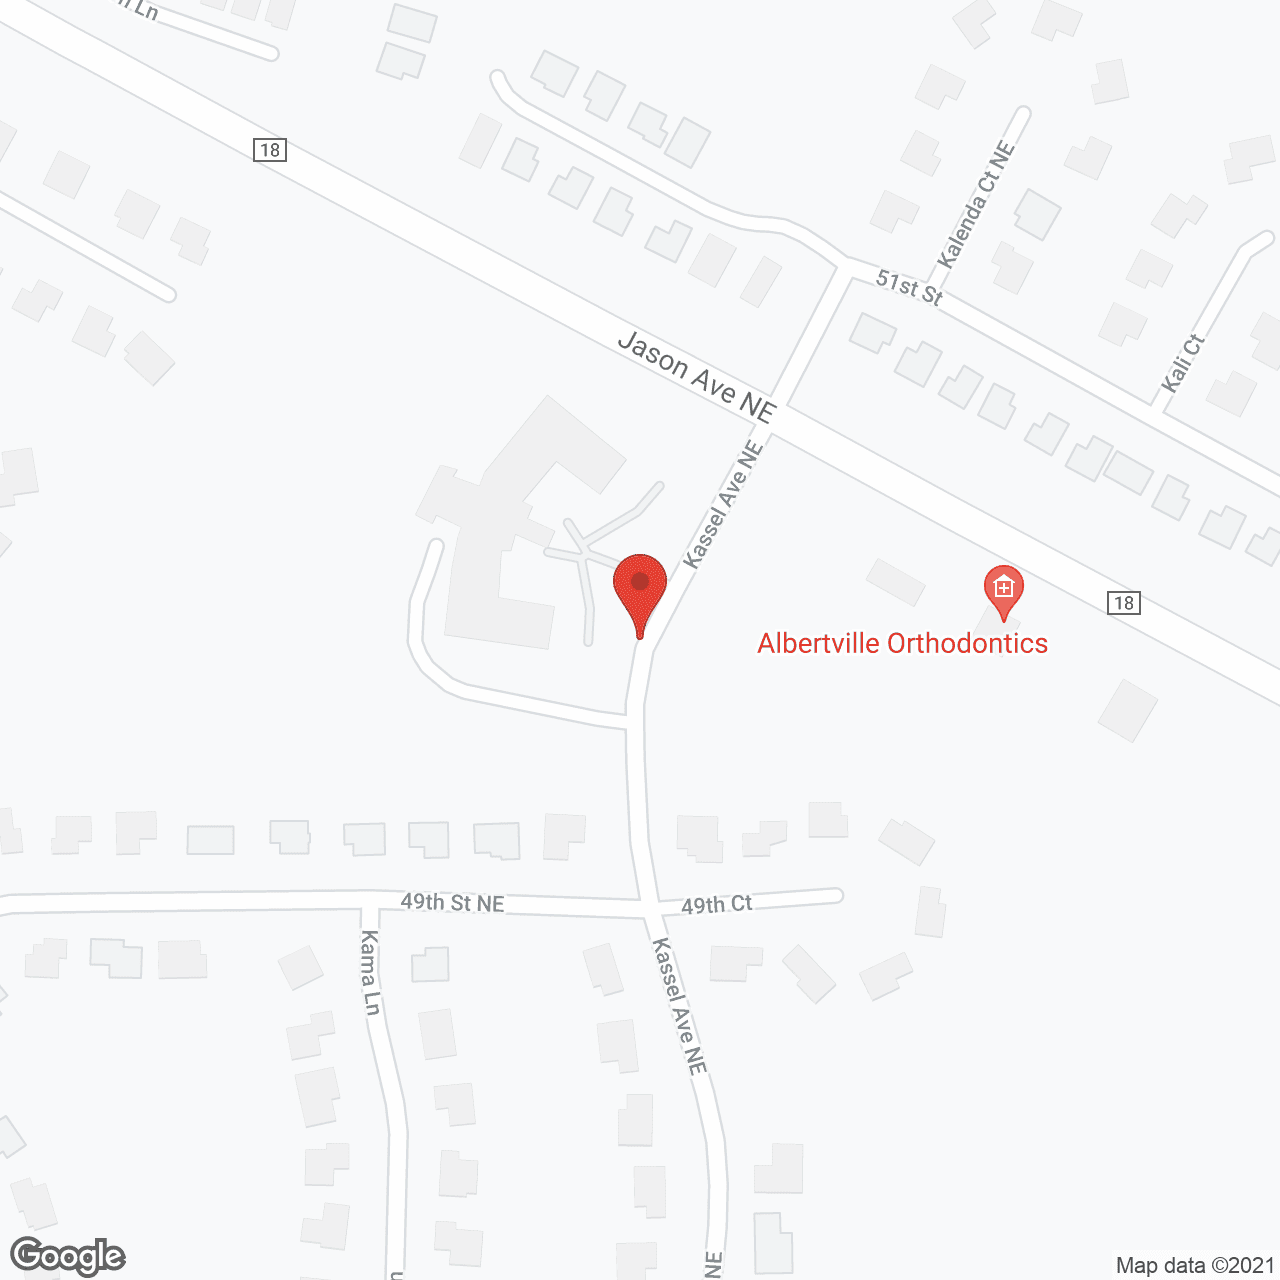 Engel Haus in google map